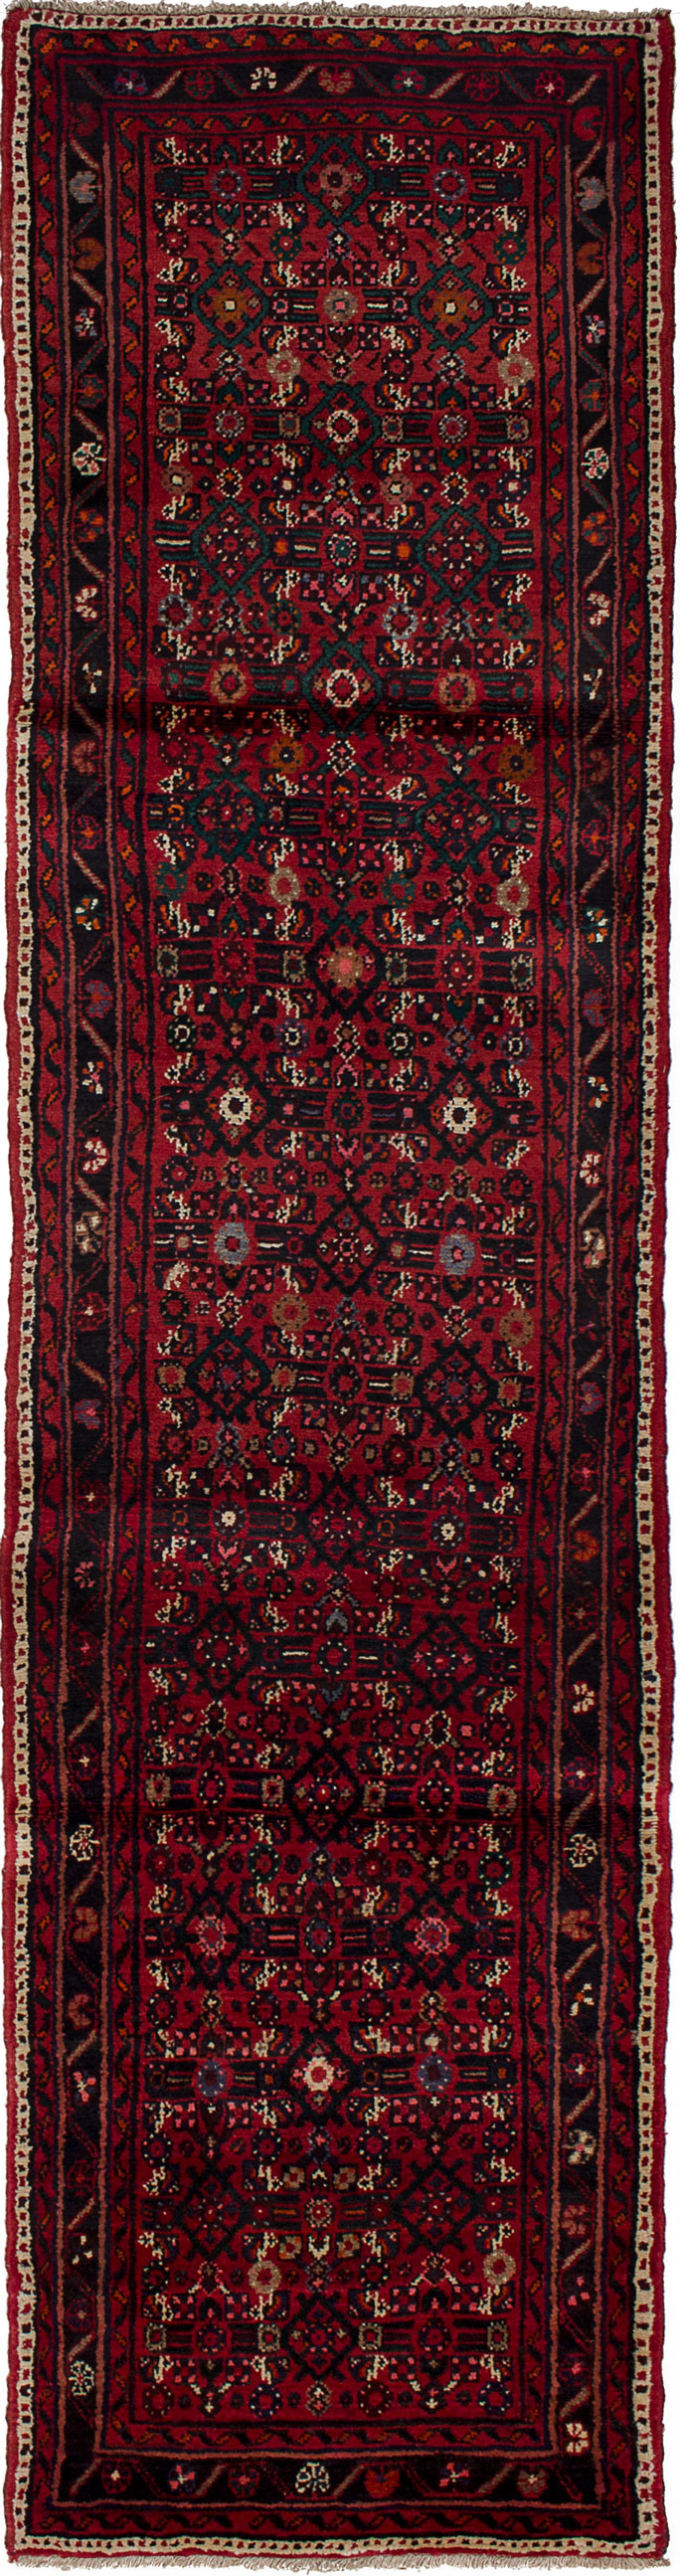 Hand-knotted Hamadan Dark Red Wool Rug 2'6" x 9'10"  Size: 2'6" x 9'10"  